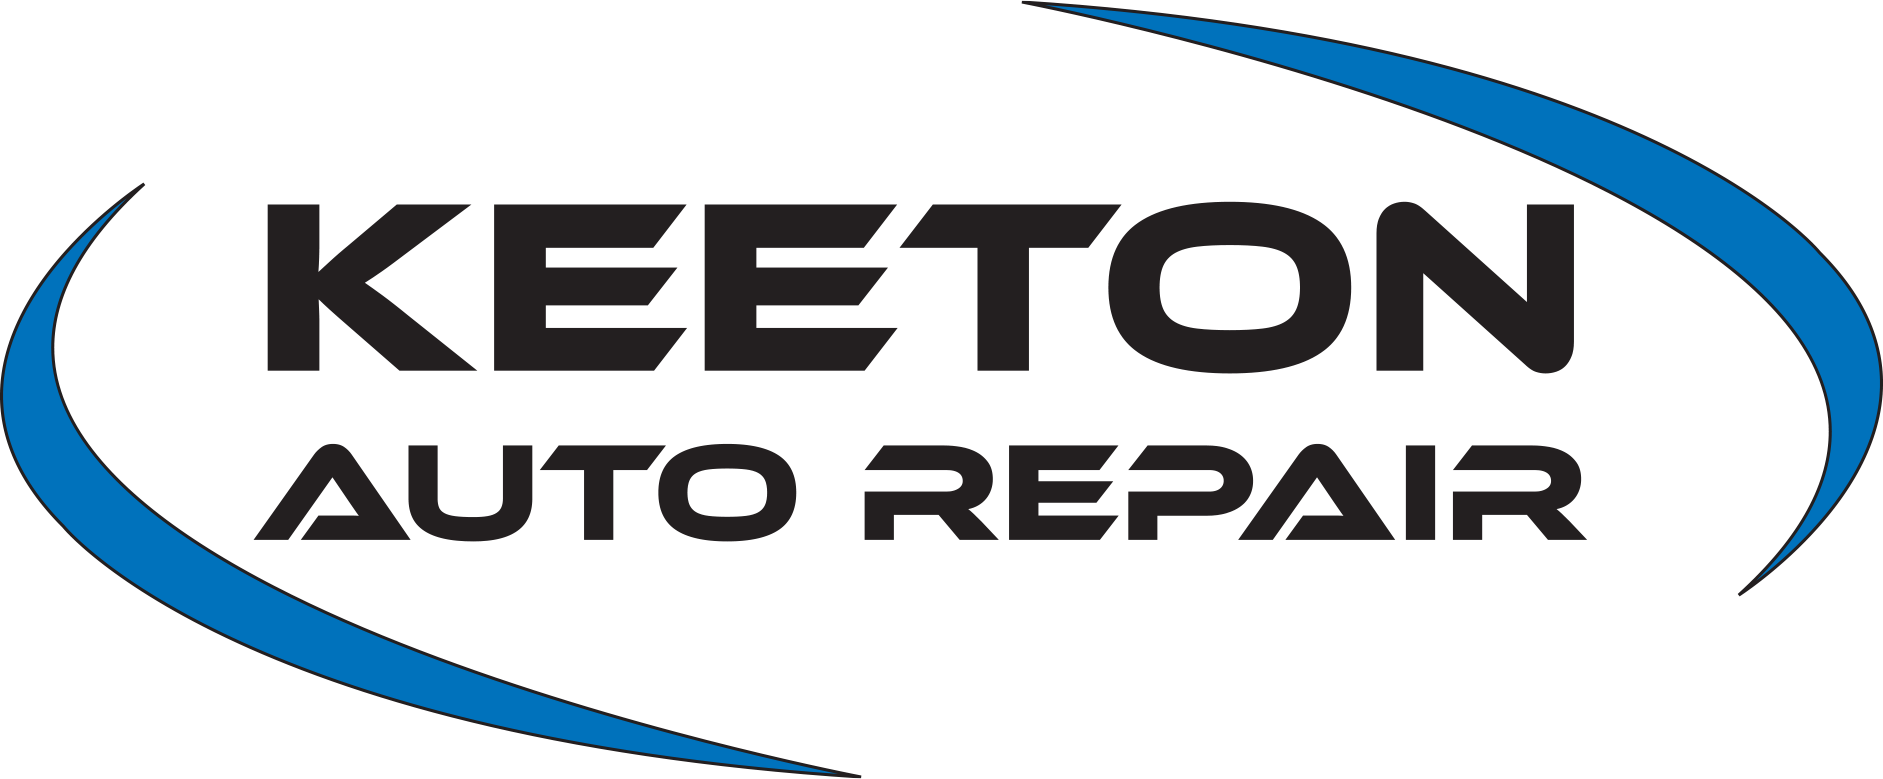 Auto Service Logo - Overland Park Auto Repair. Keeton Auto Repair